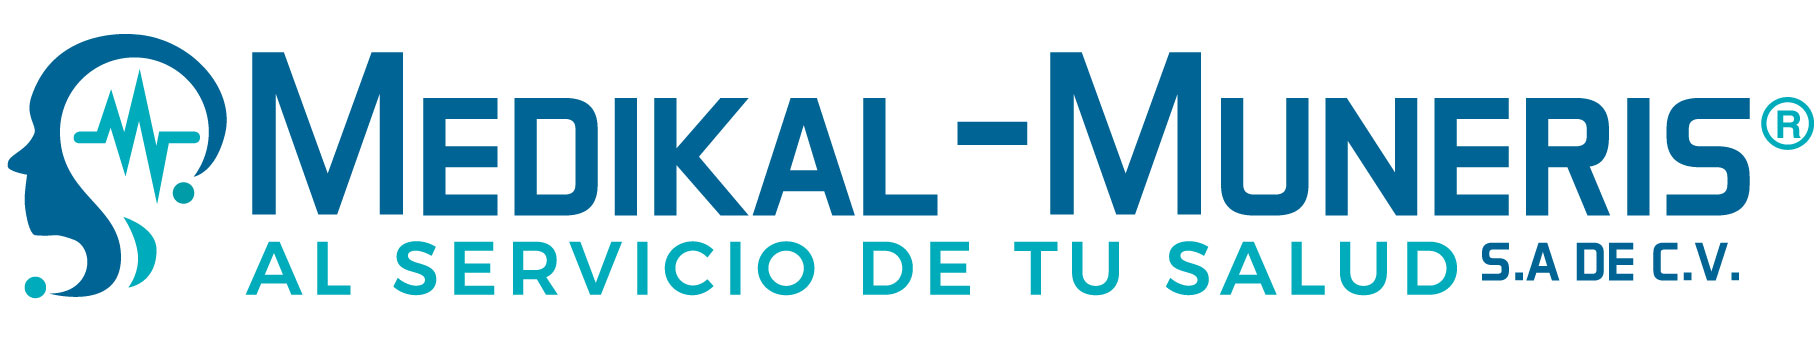 Logo Medikal-Muneris